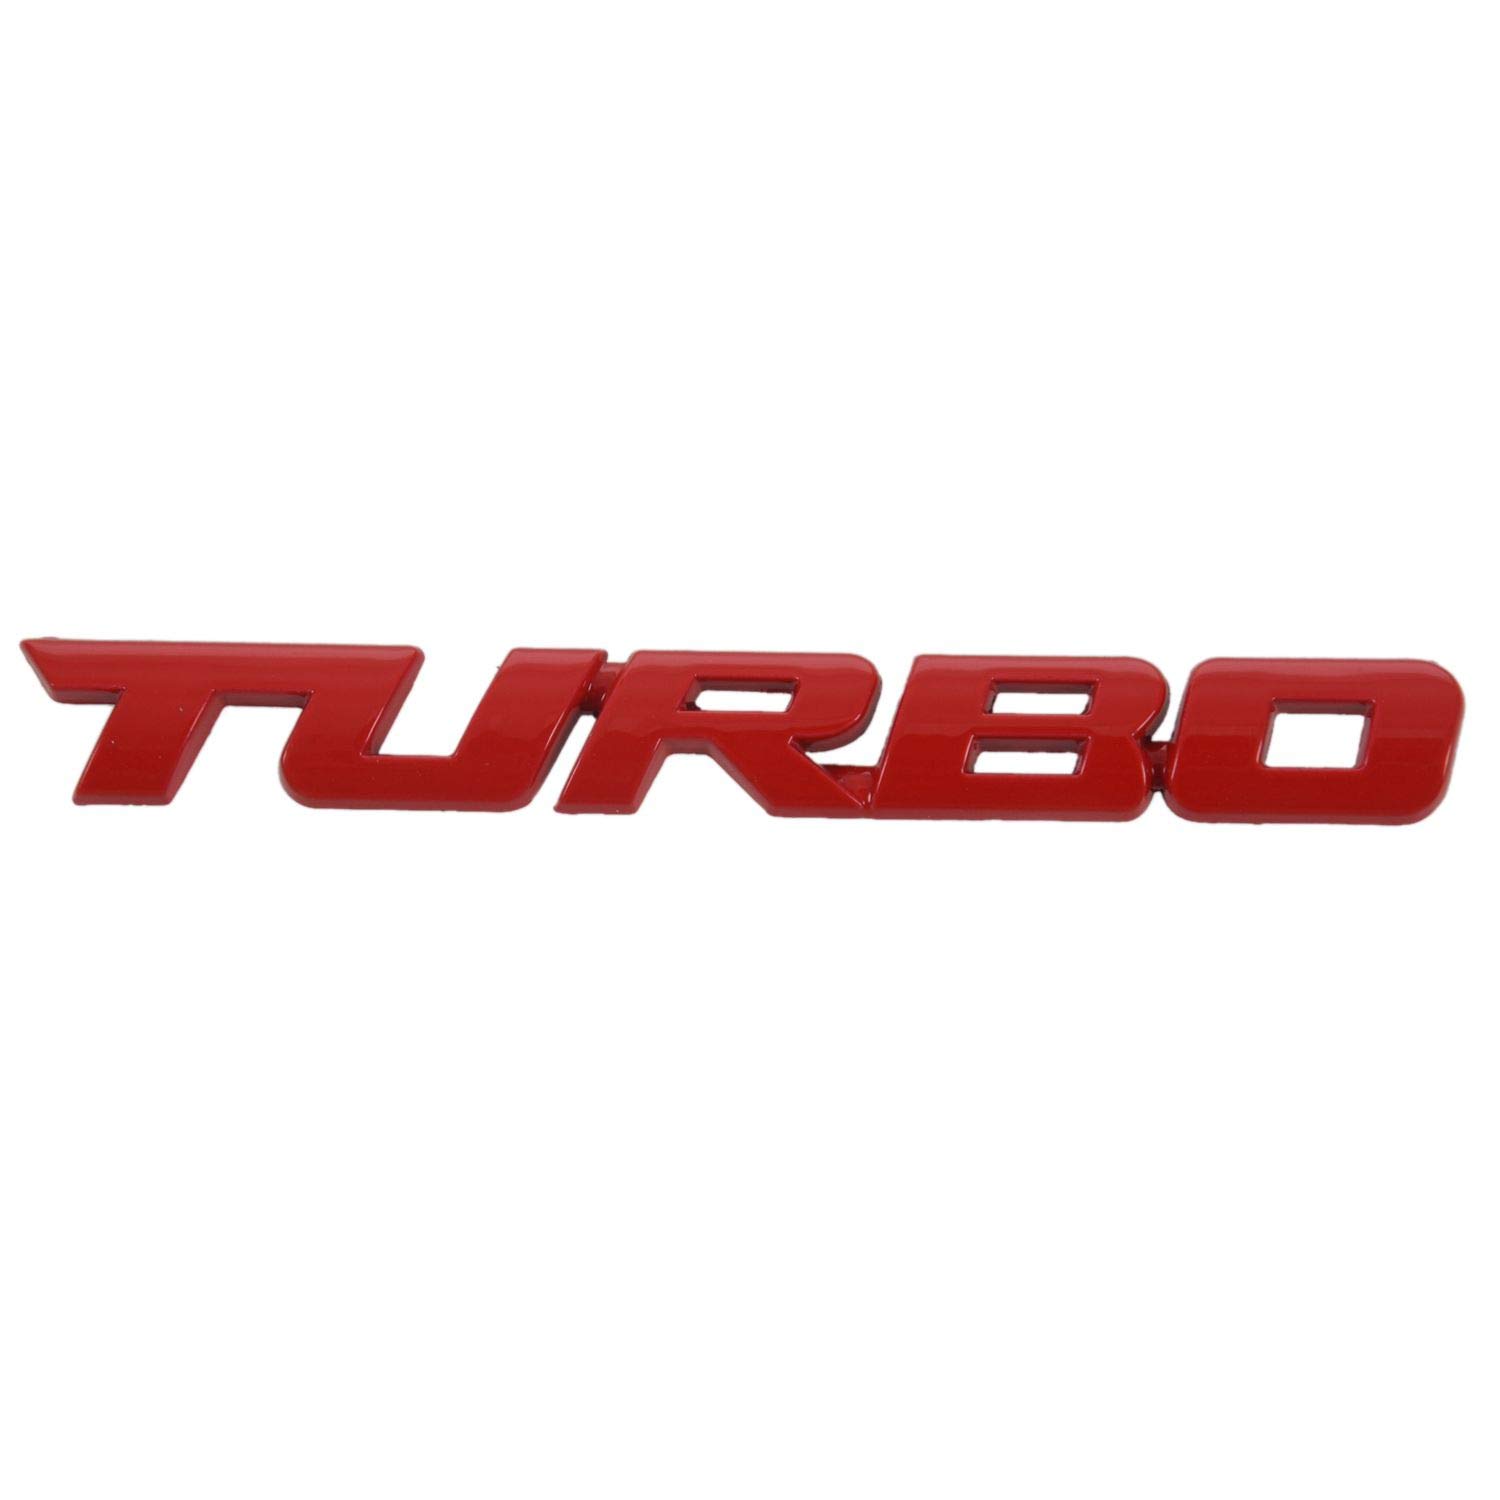 Fvoagaou Turbo Universal Auto Motorrad Auto 3D Metall Emblem Abzeichen Aufkleber, Rot von Fvoagaou